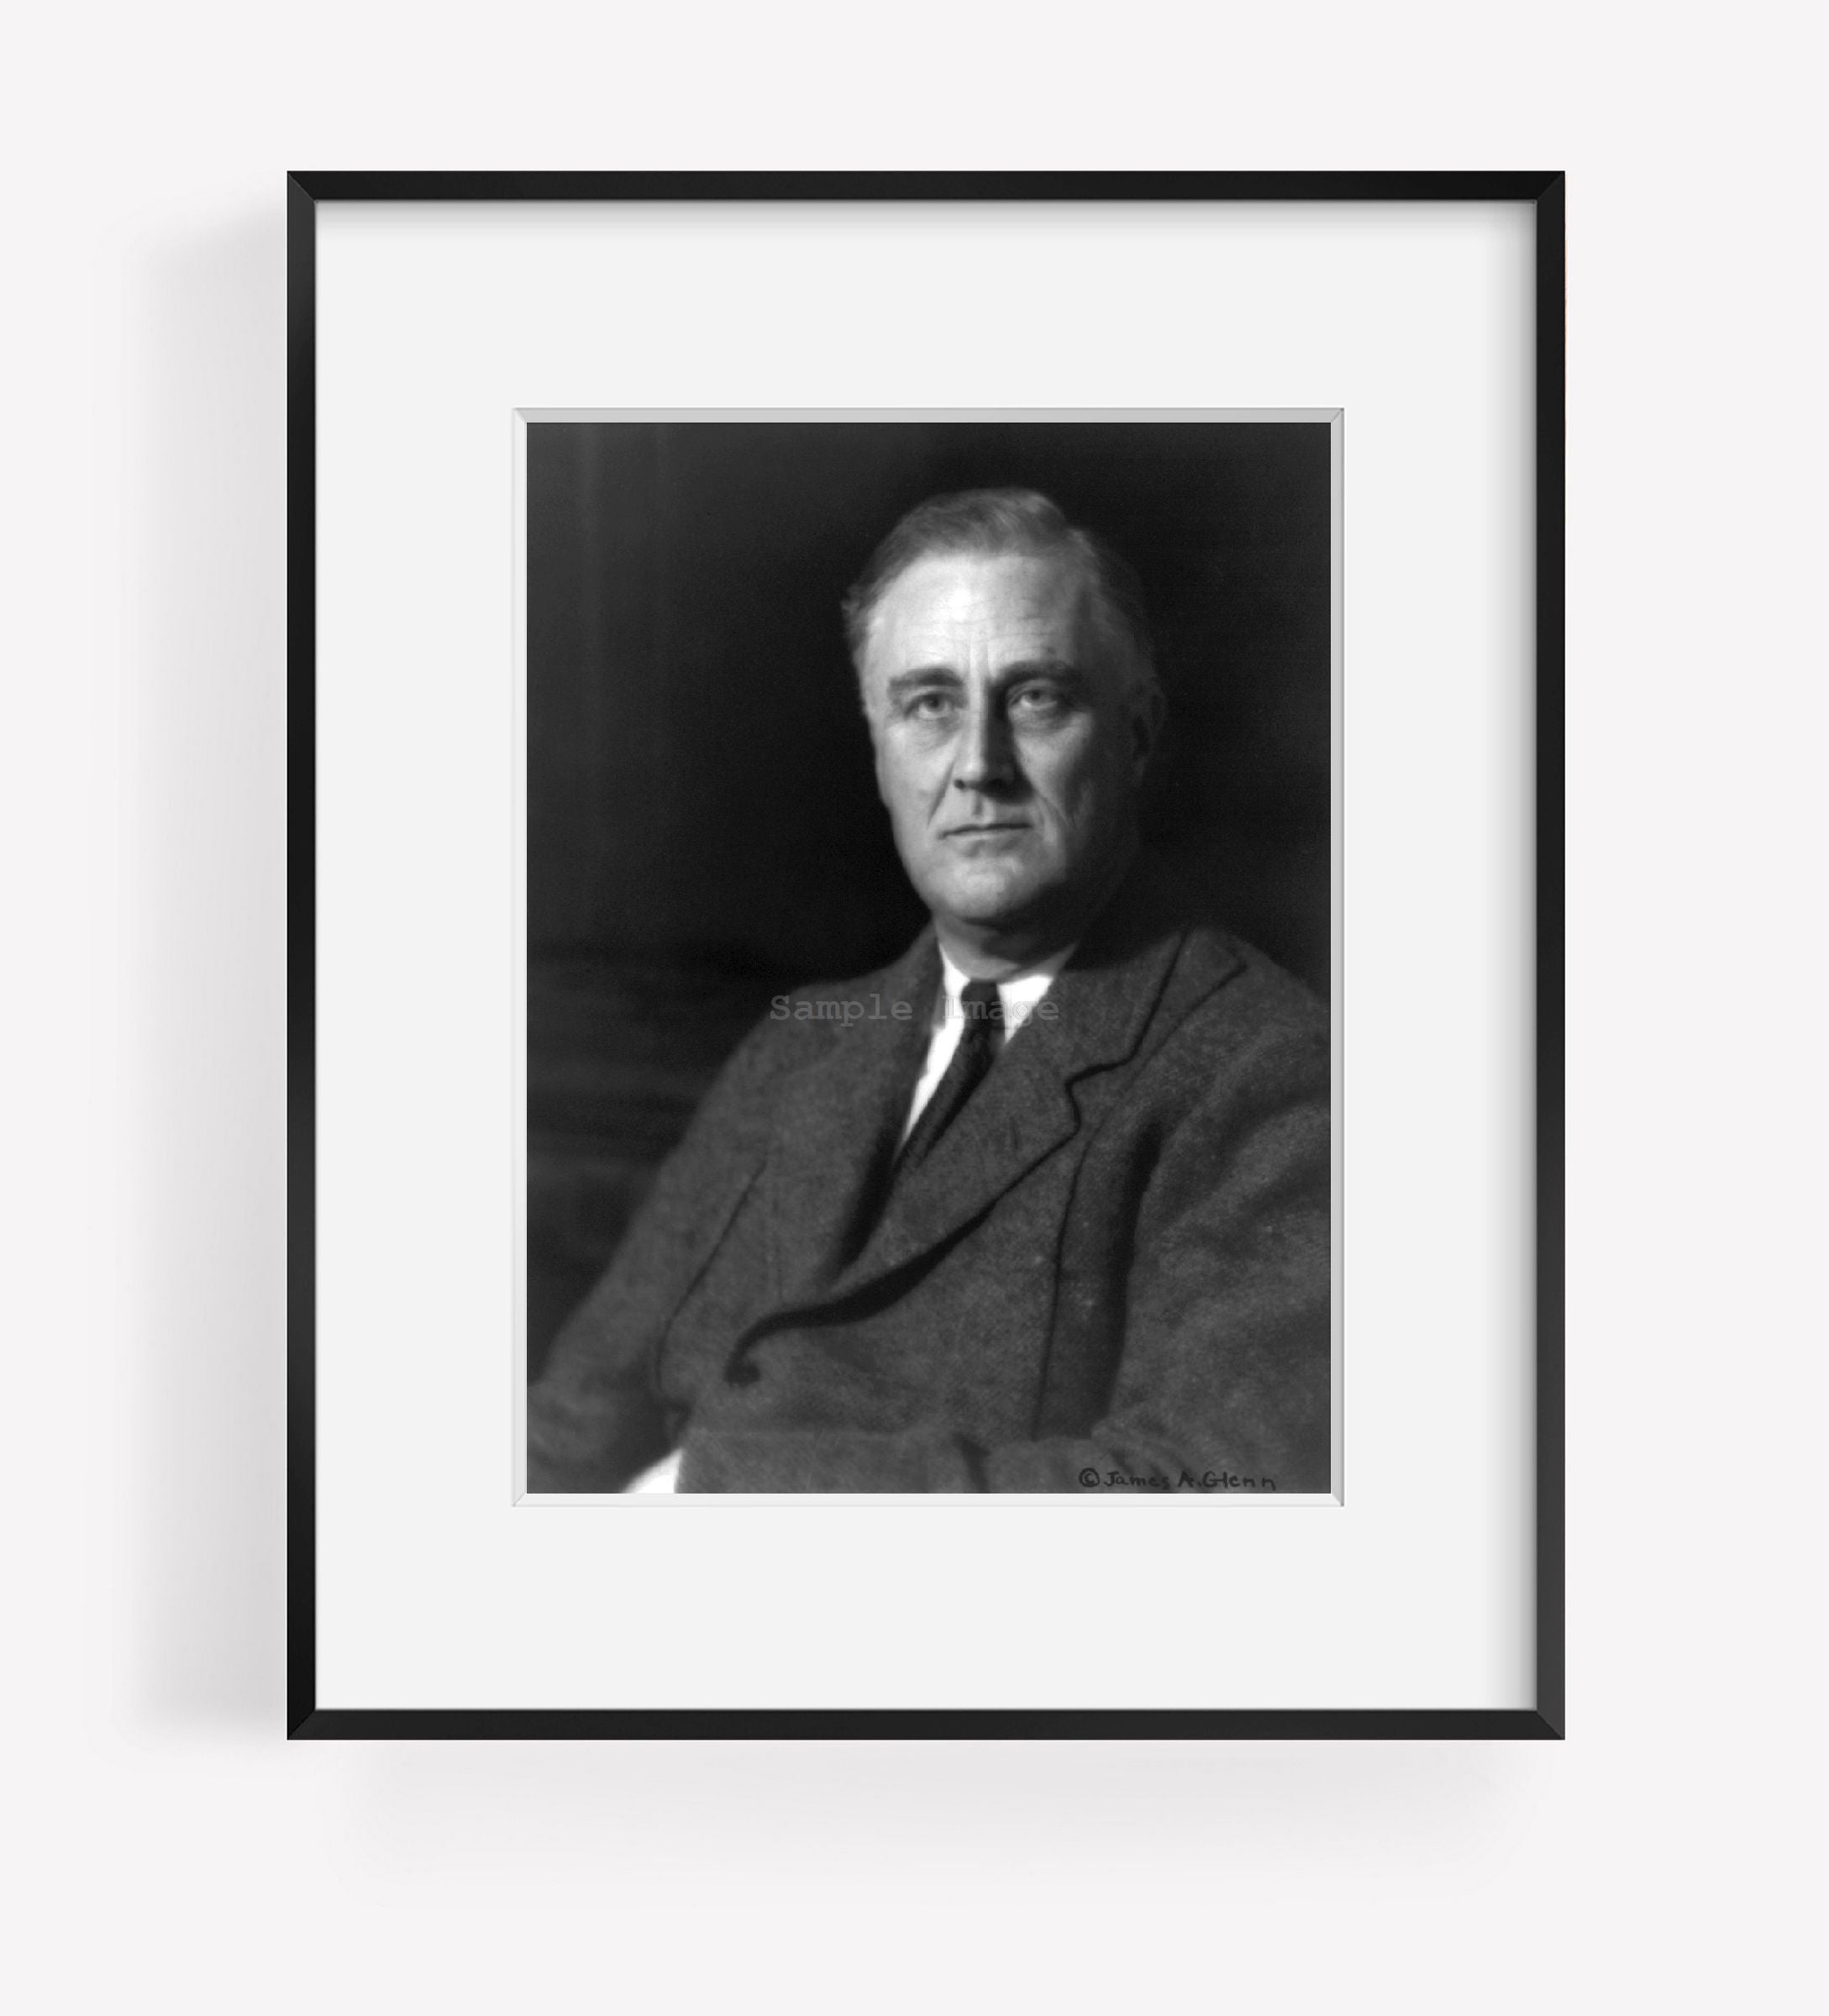 Photo: Franklin Delano Roosevelt, FDR, 1882-1945, President, United States, US